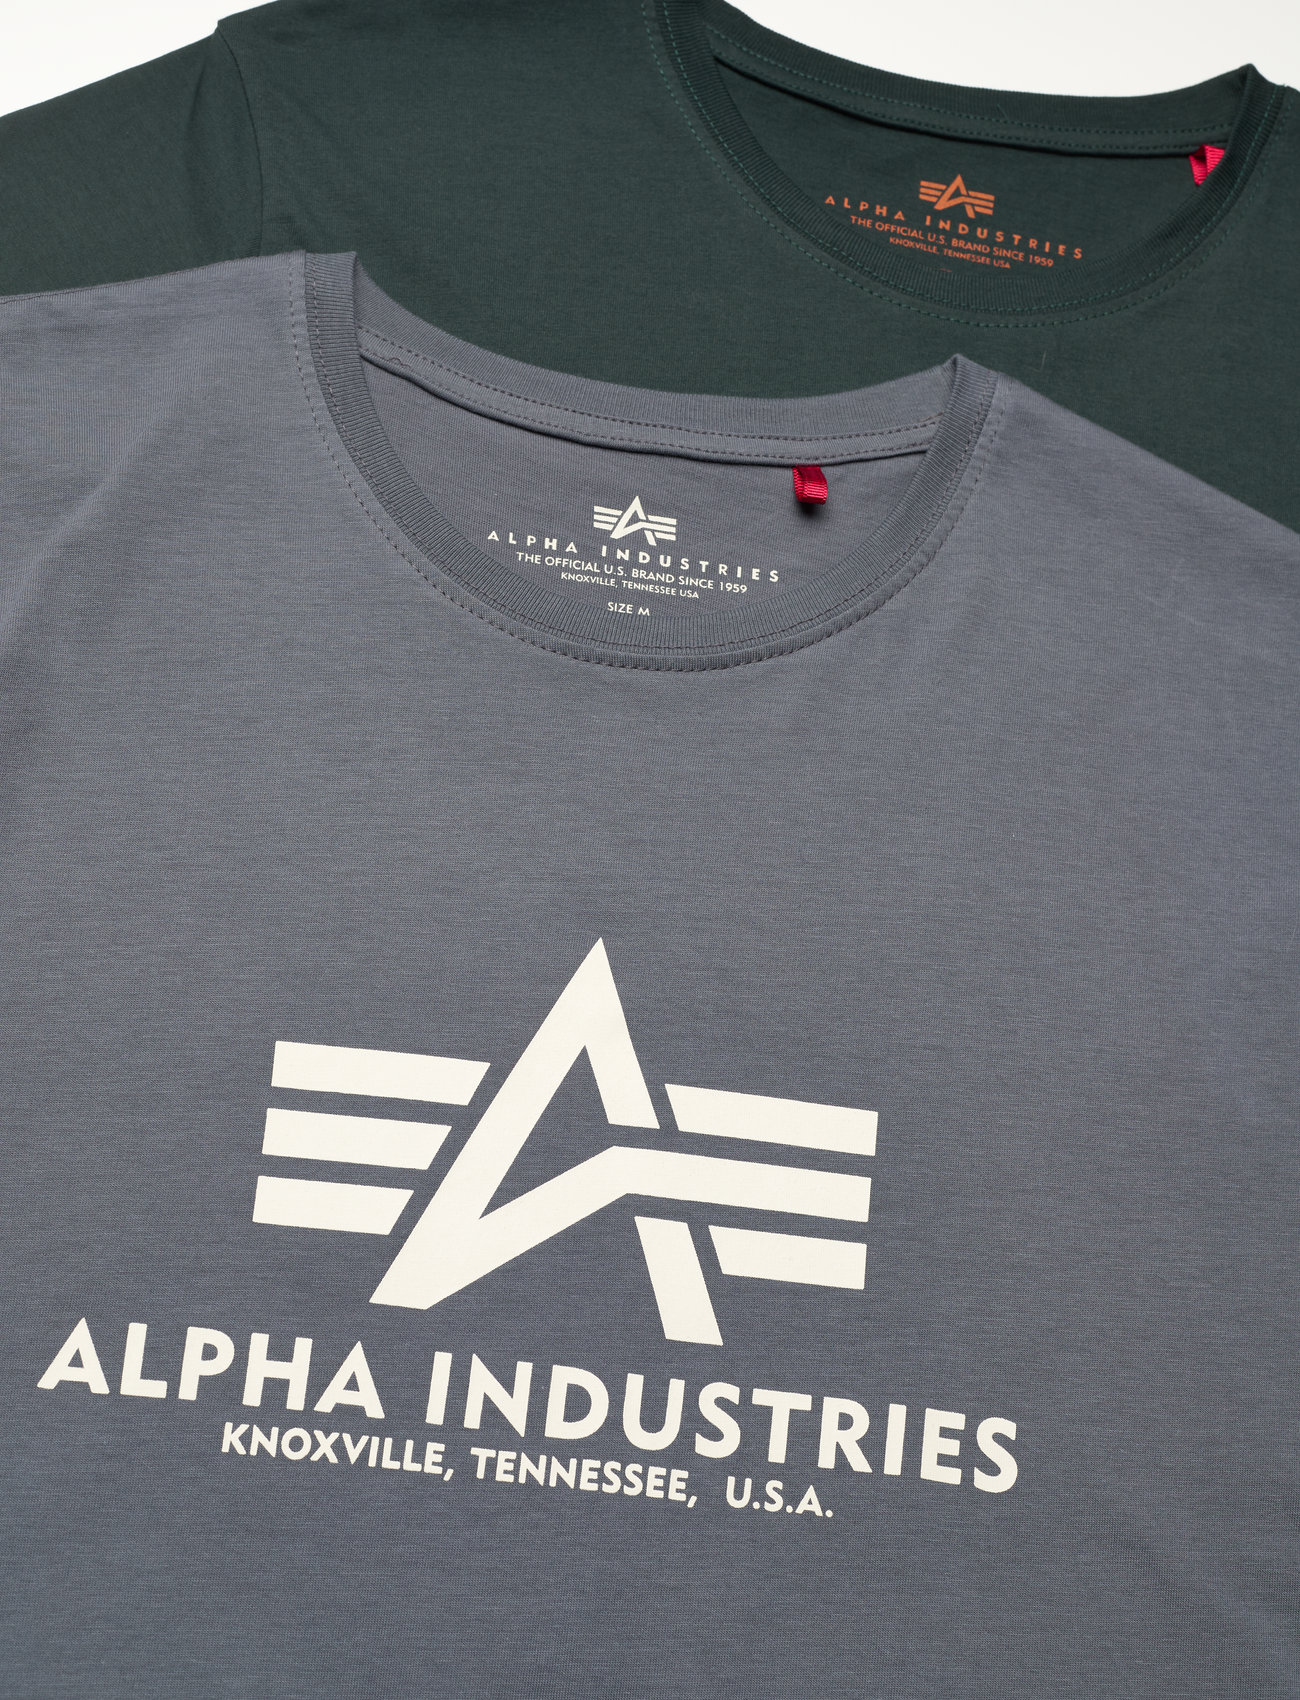 Alpha Industries - Basic T 2 Pack - kurzärmelige - grey black/dark petrol - 1